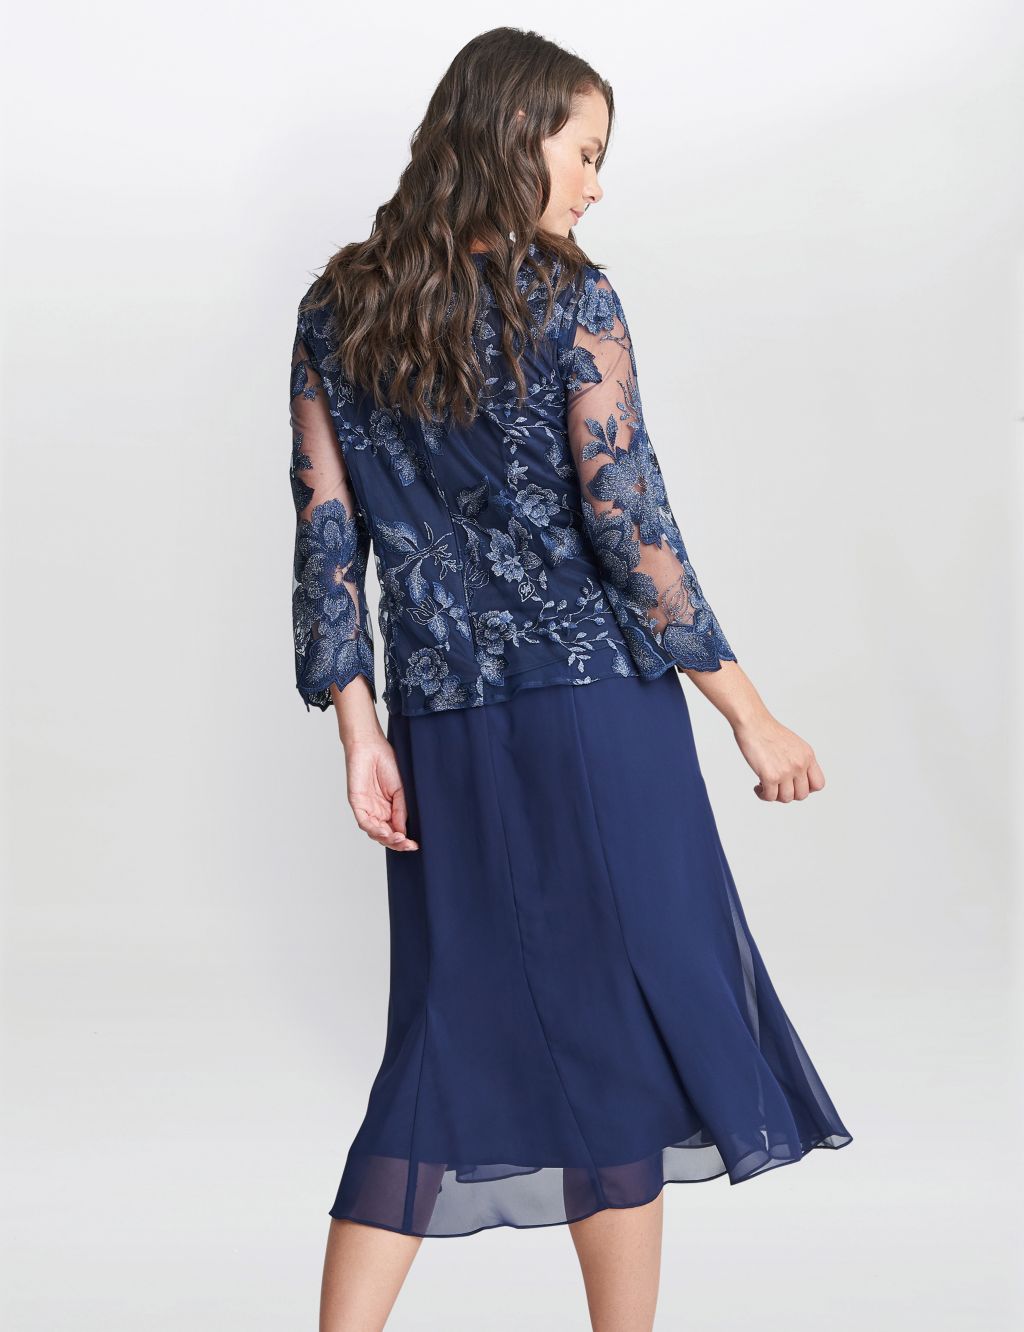 Lace Midi Swing Dress with Mock Jacket image 2